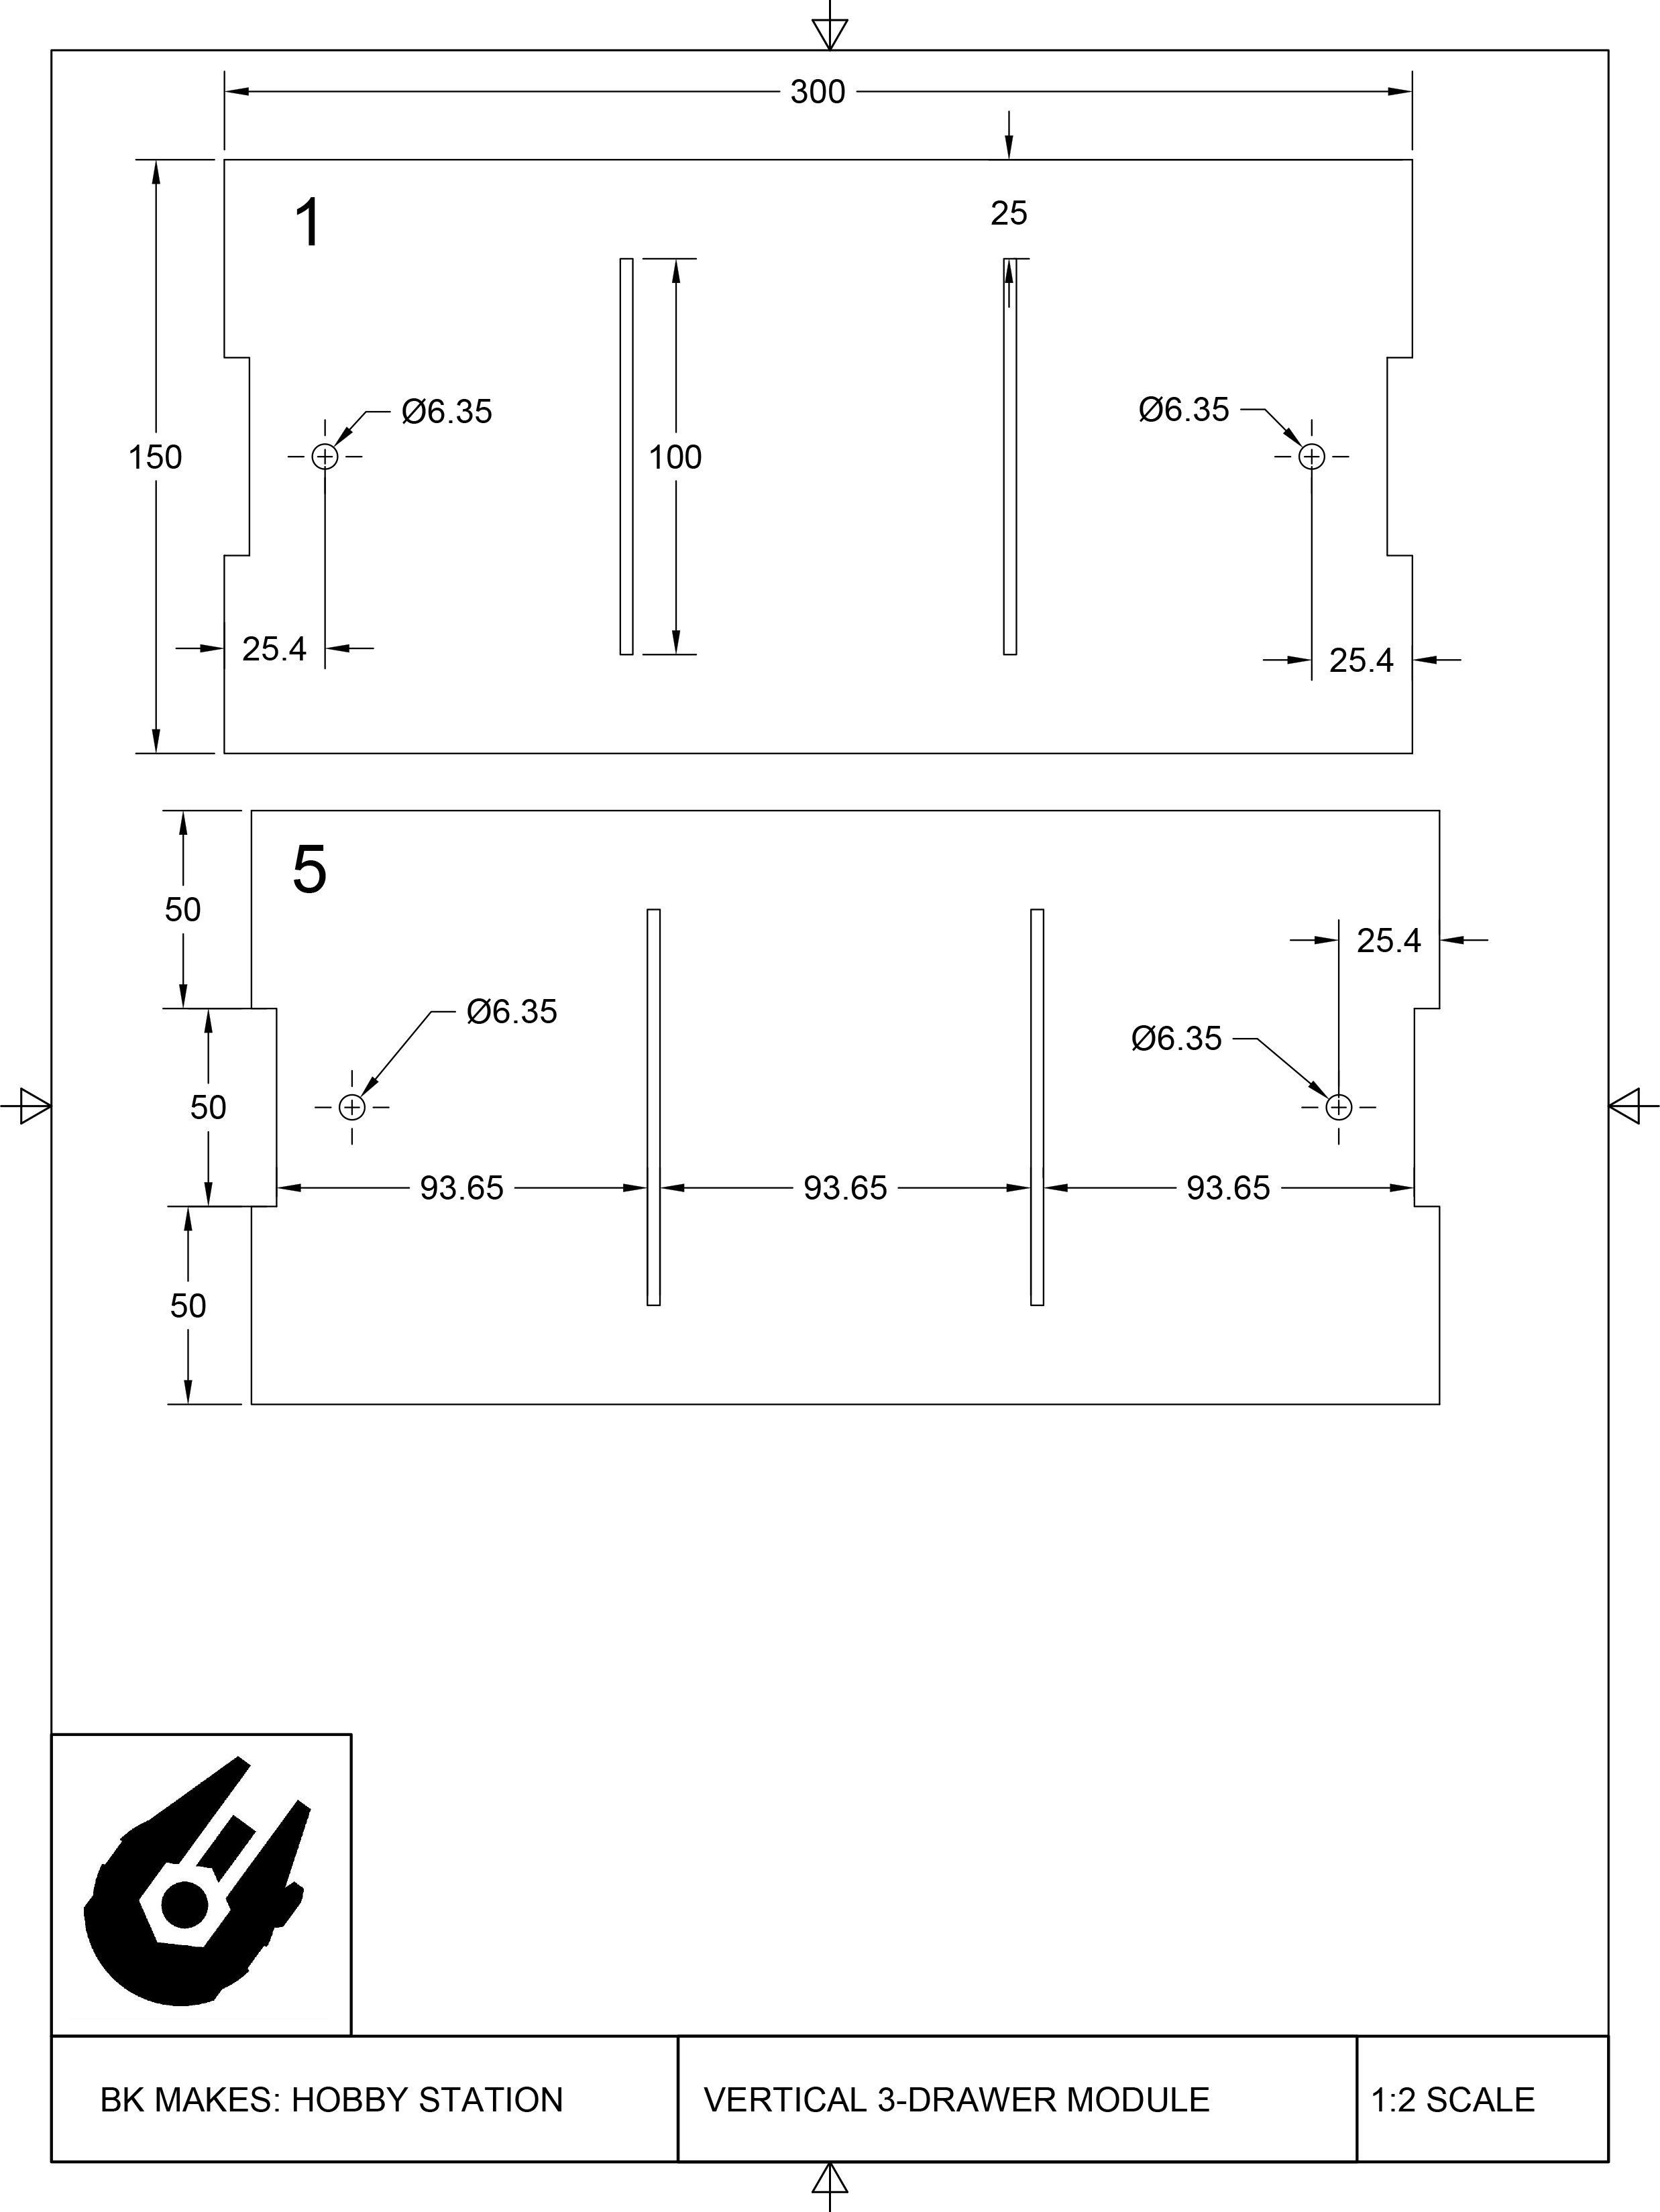 Vertical 3-Drawer Module Templates-1.jpg